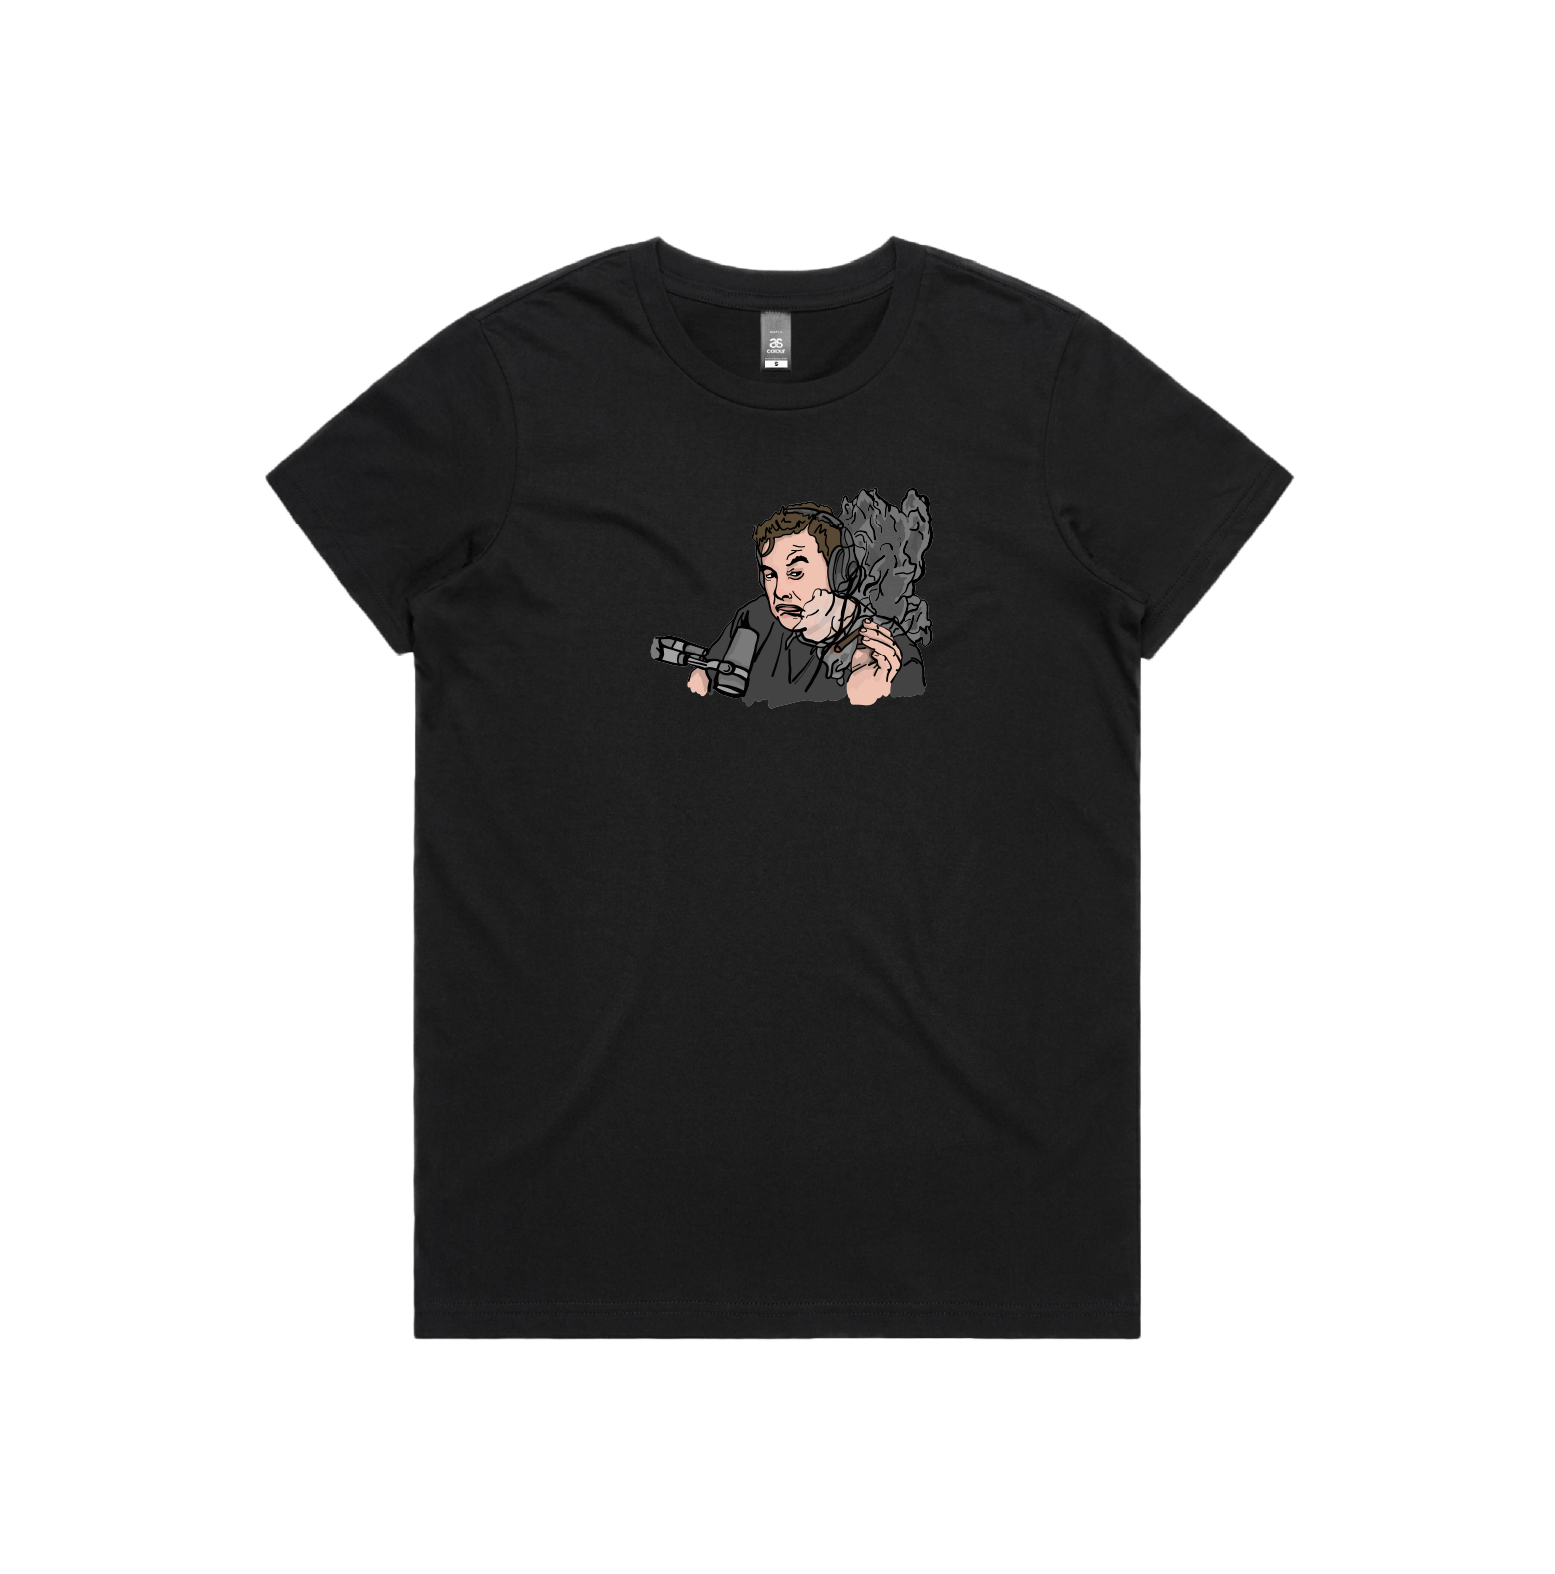 XS / Black / Large Front Design Smokin' Elon 💨 - Women's T Shirt